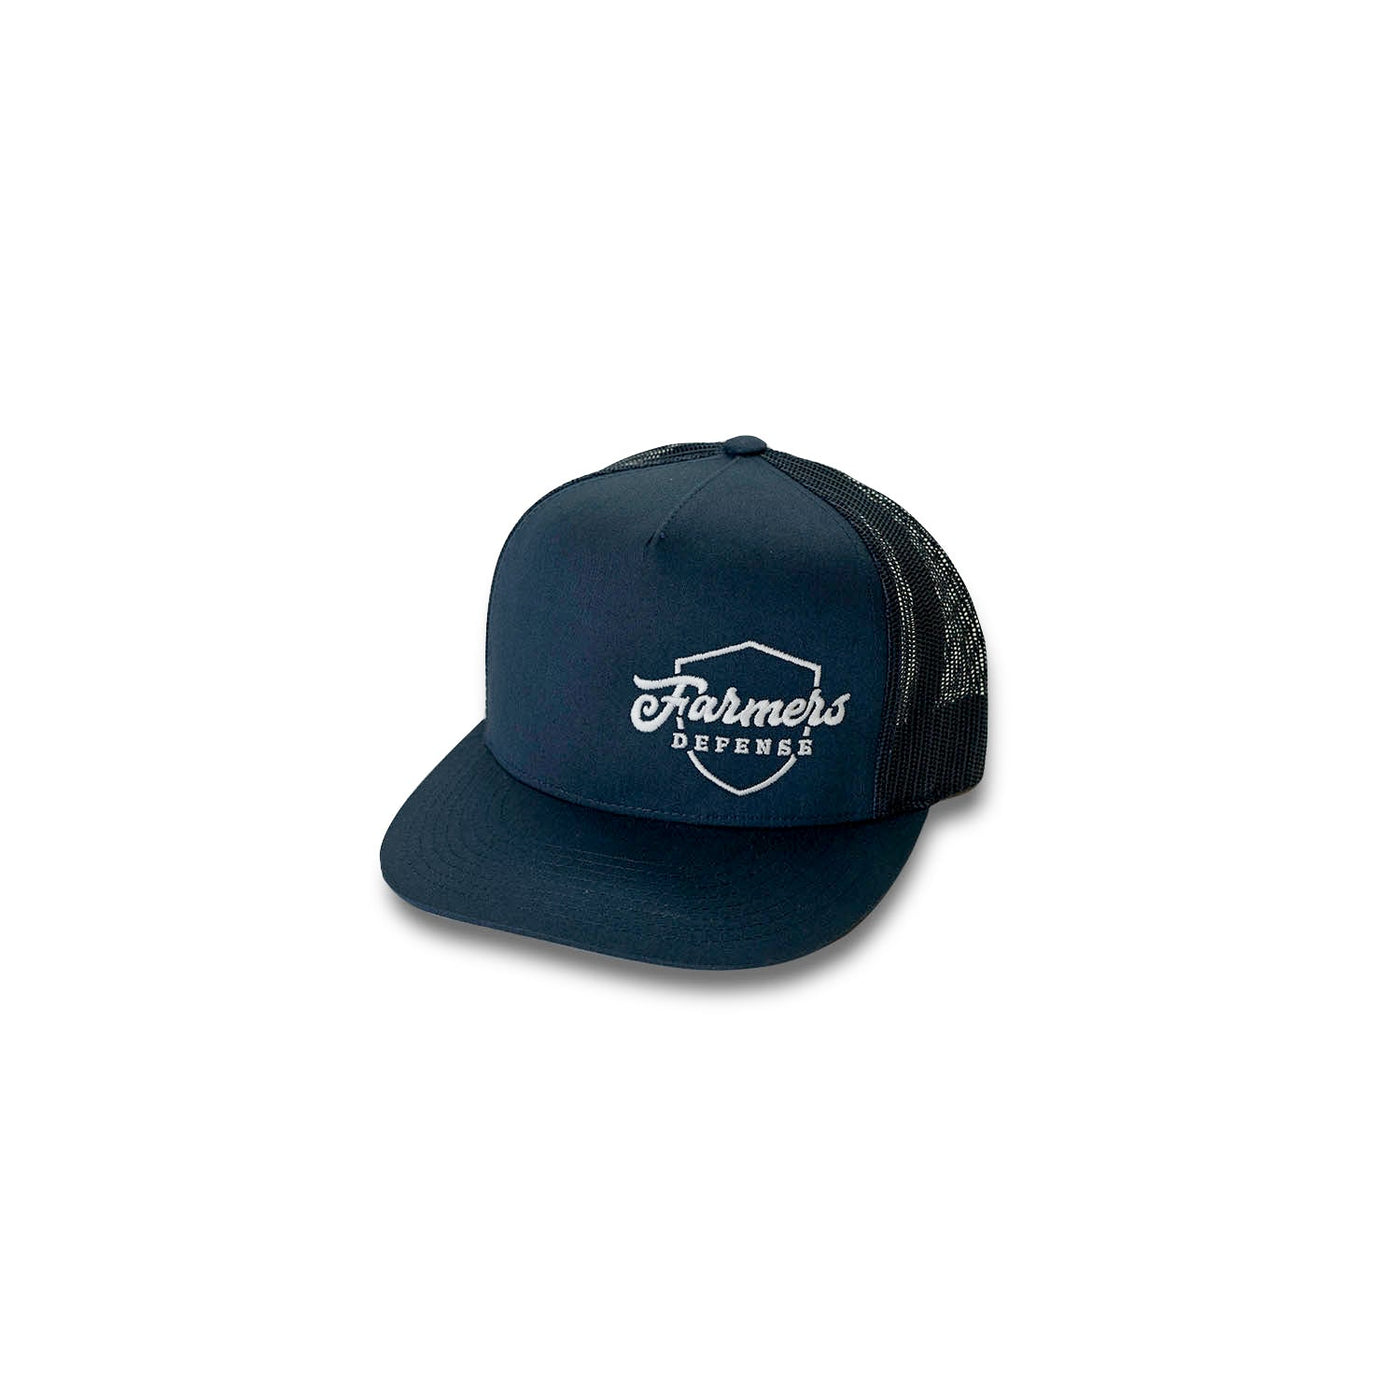 Farmers Defense Trucker Hat -Embroidered Shield Logo - Navy on Navy